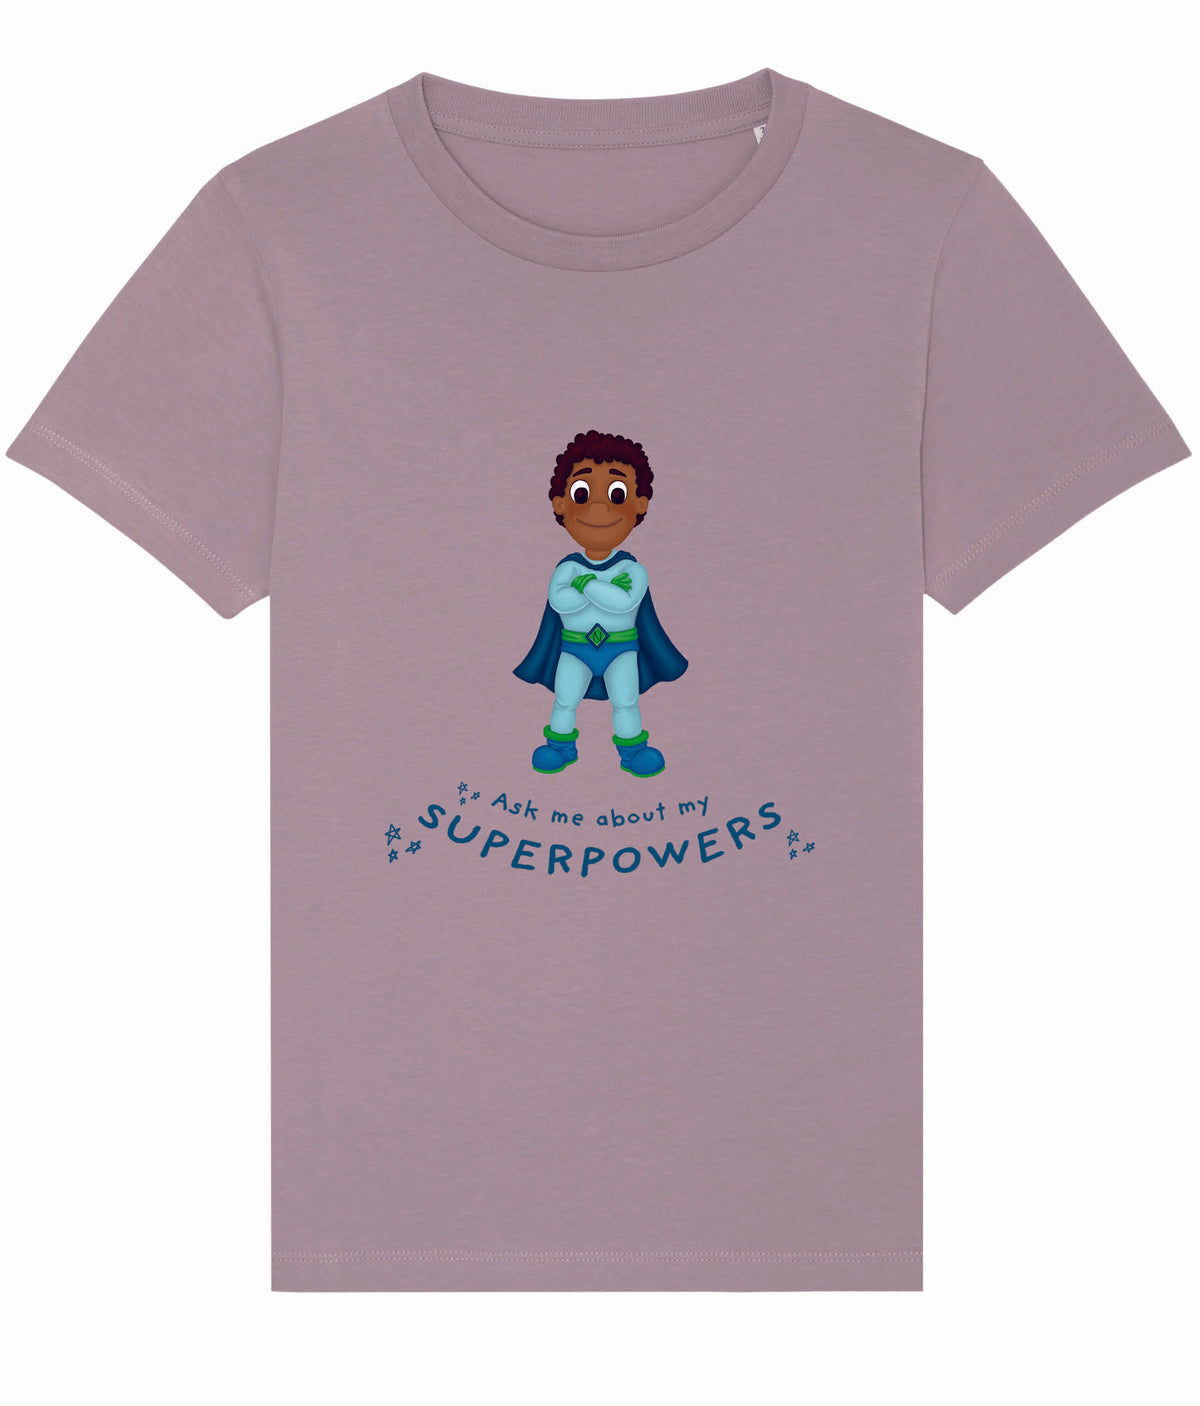 Kids Superhero T Shirt - Super Noah!